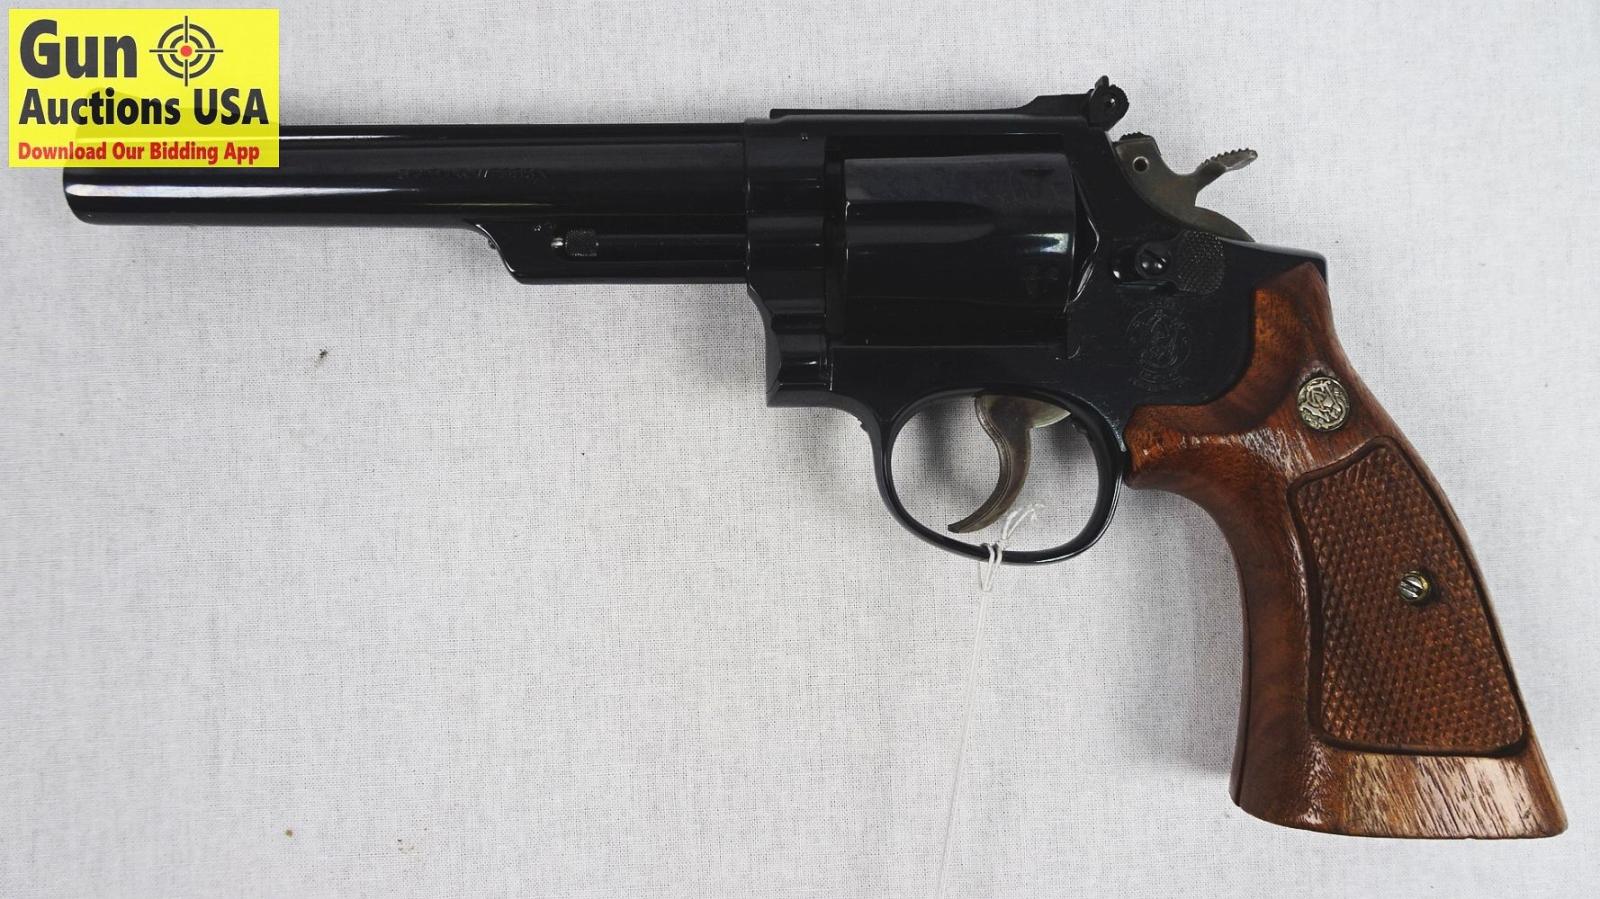 Smith & Wesson 53 .22 Jet Mag Revolver Revolver. L